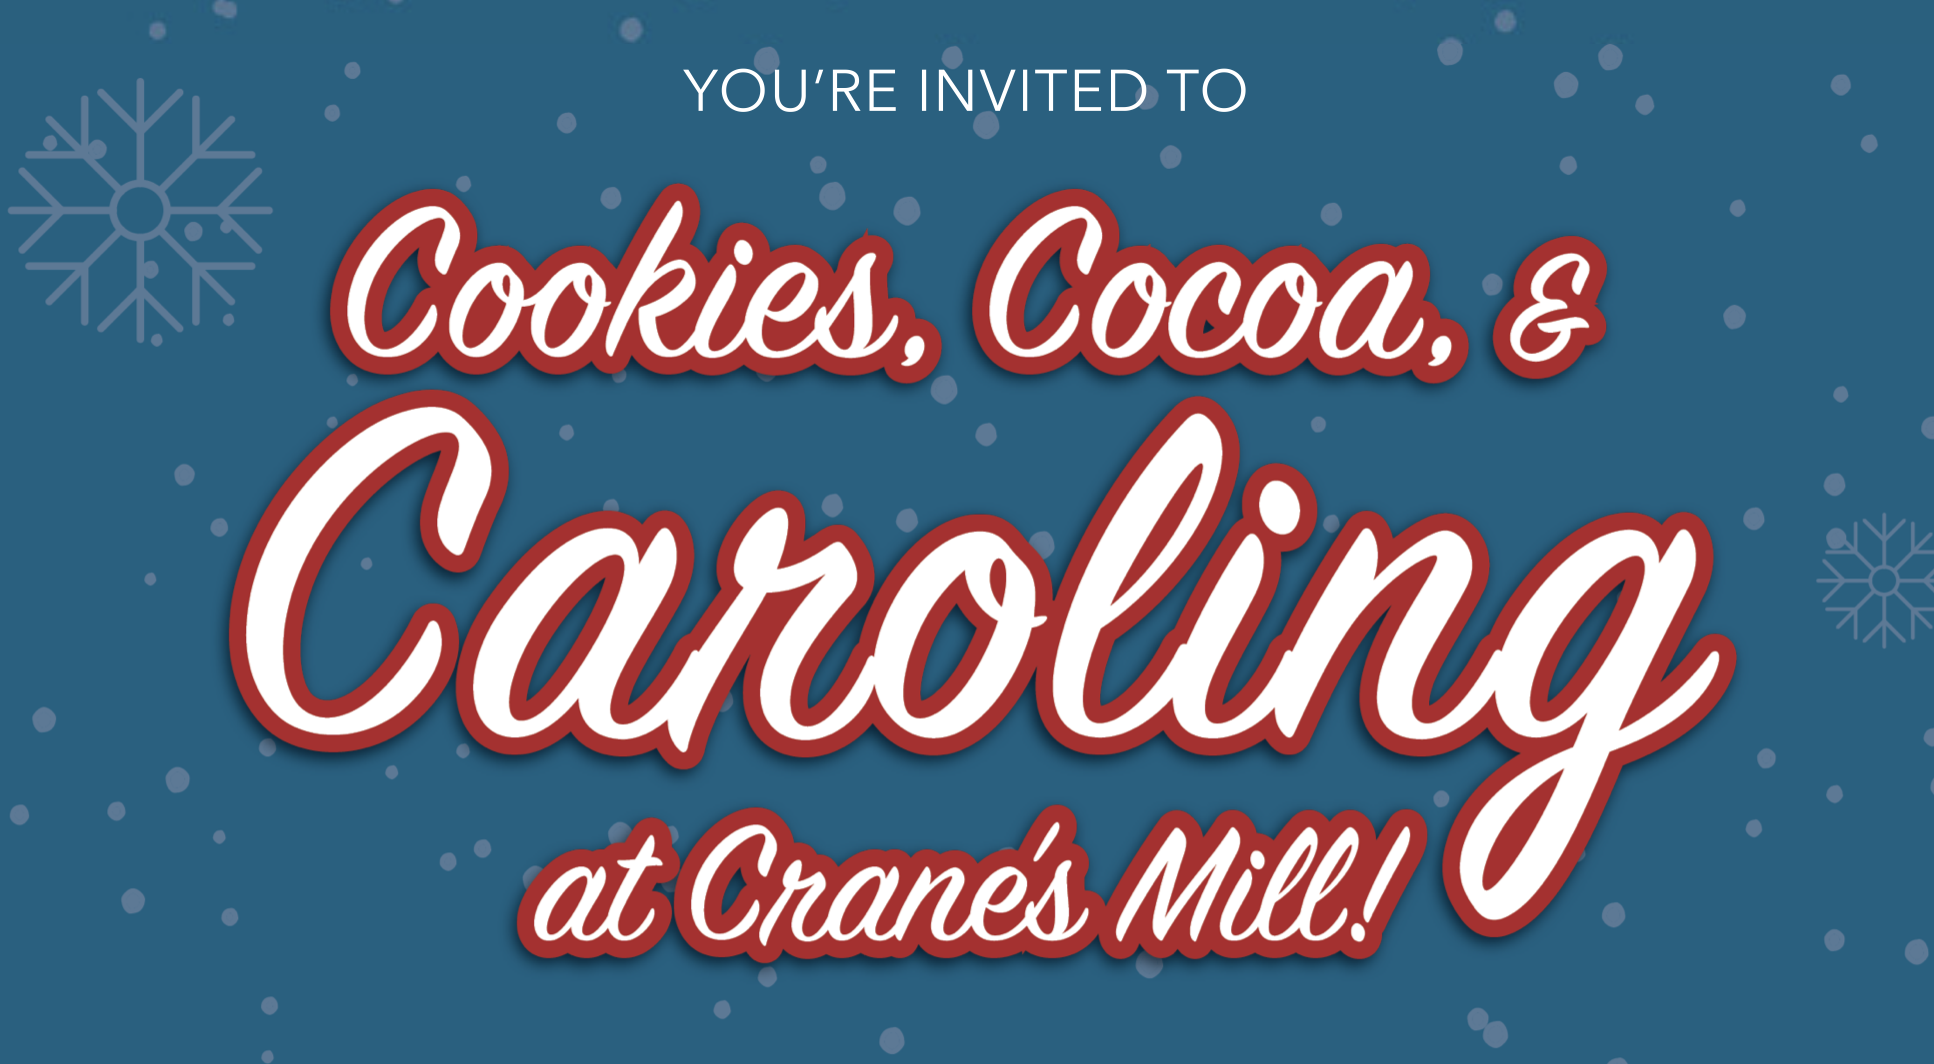 Cookies, Cocoa, & Caroling at Crane's Mill!